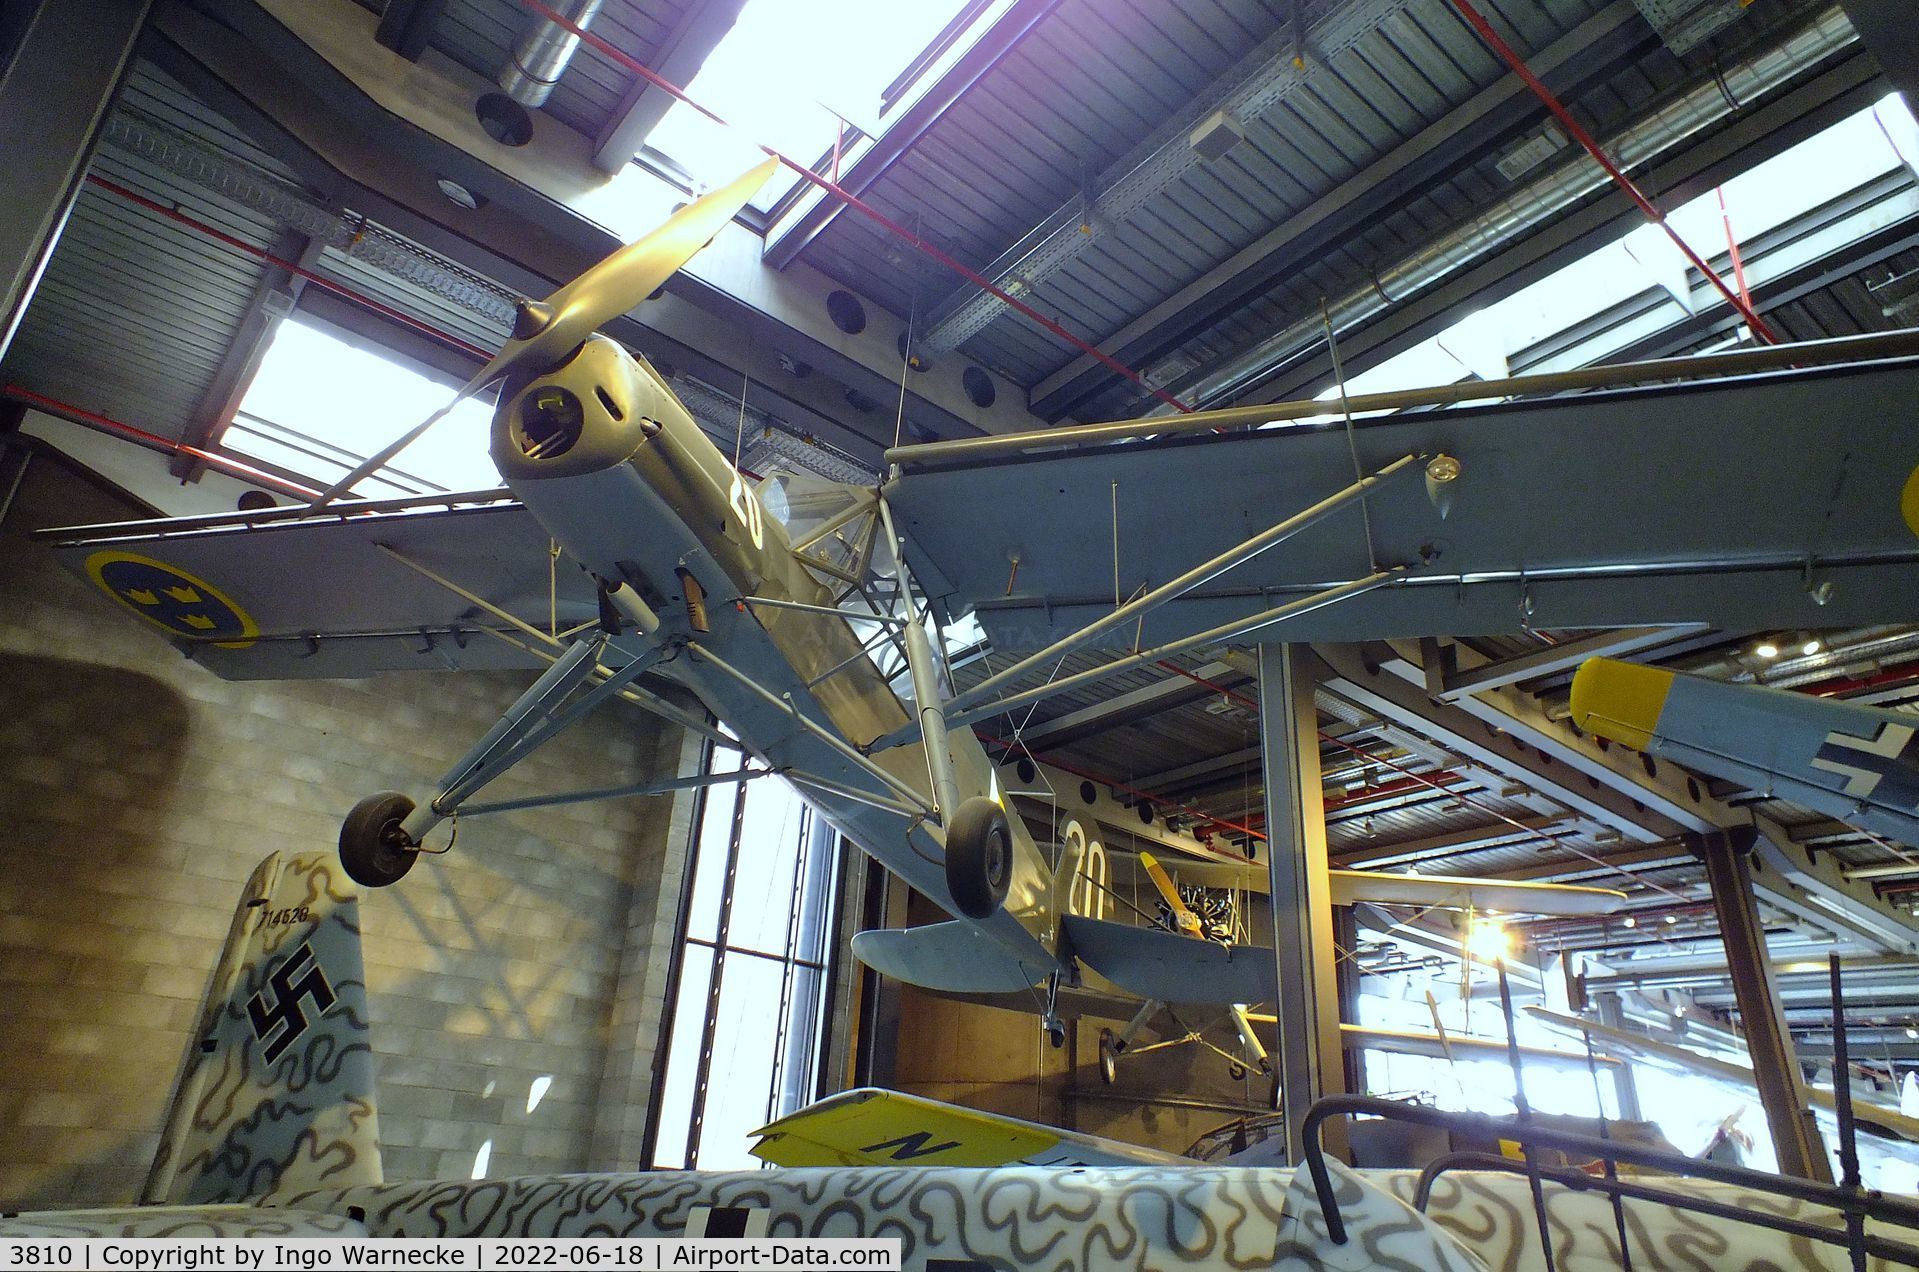 3810, Fieseler S-14B Storch (Fi-156C-3) C/N 110062, Fieseler Fi 156C-3 (S-14B) Storch at the Deutsches-Technikmuseum (DTM), Berlin